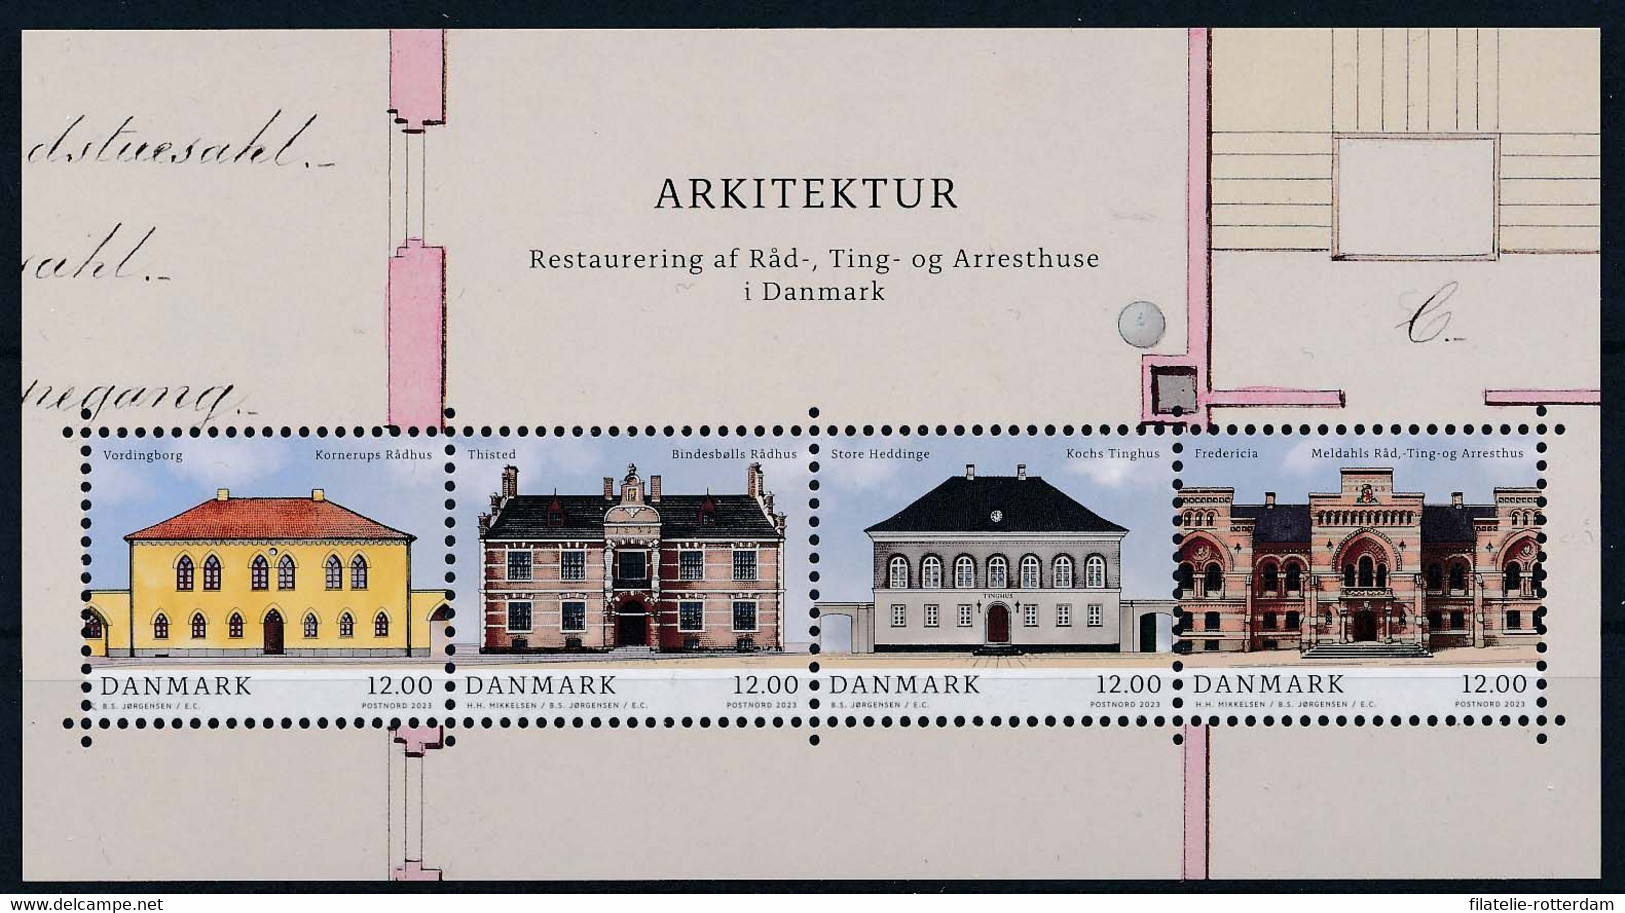 Denemarken / Denmark - Postfris / MNH - Sheet Architecture 2023 - Nuovi